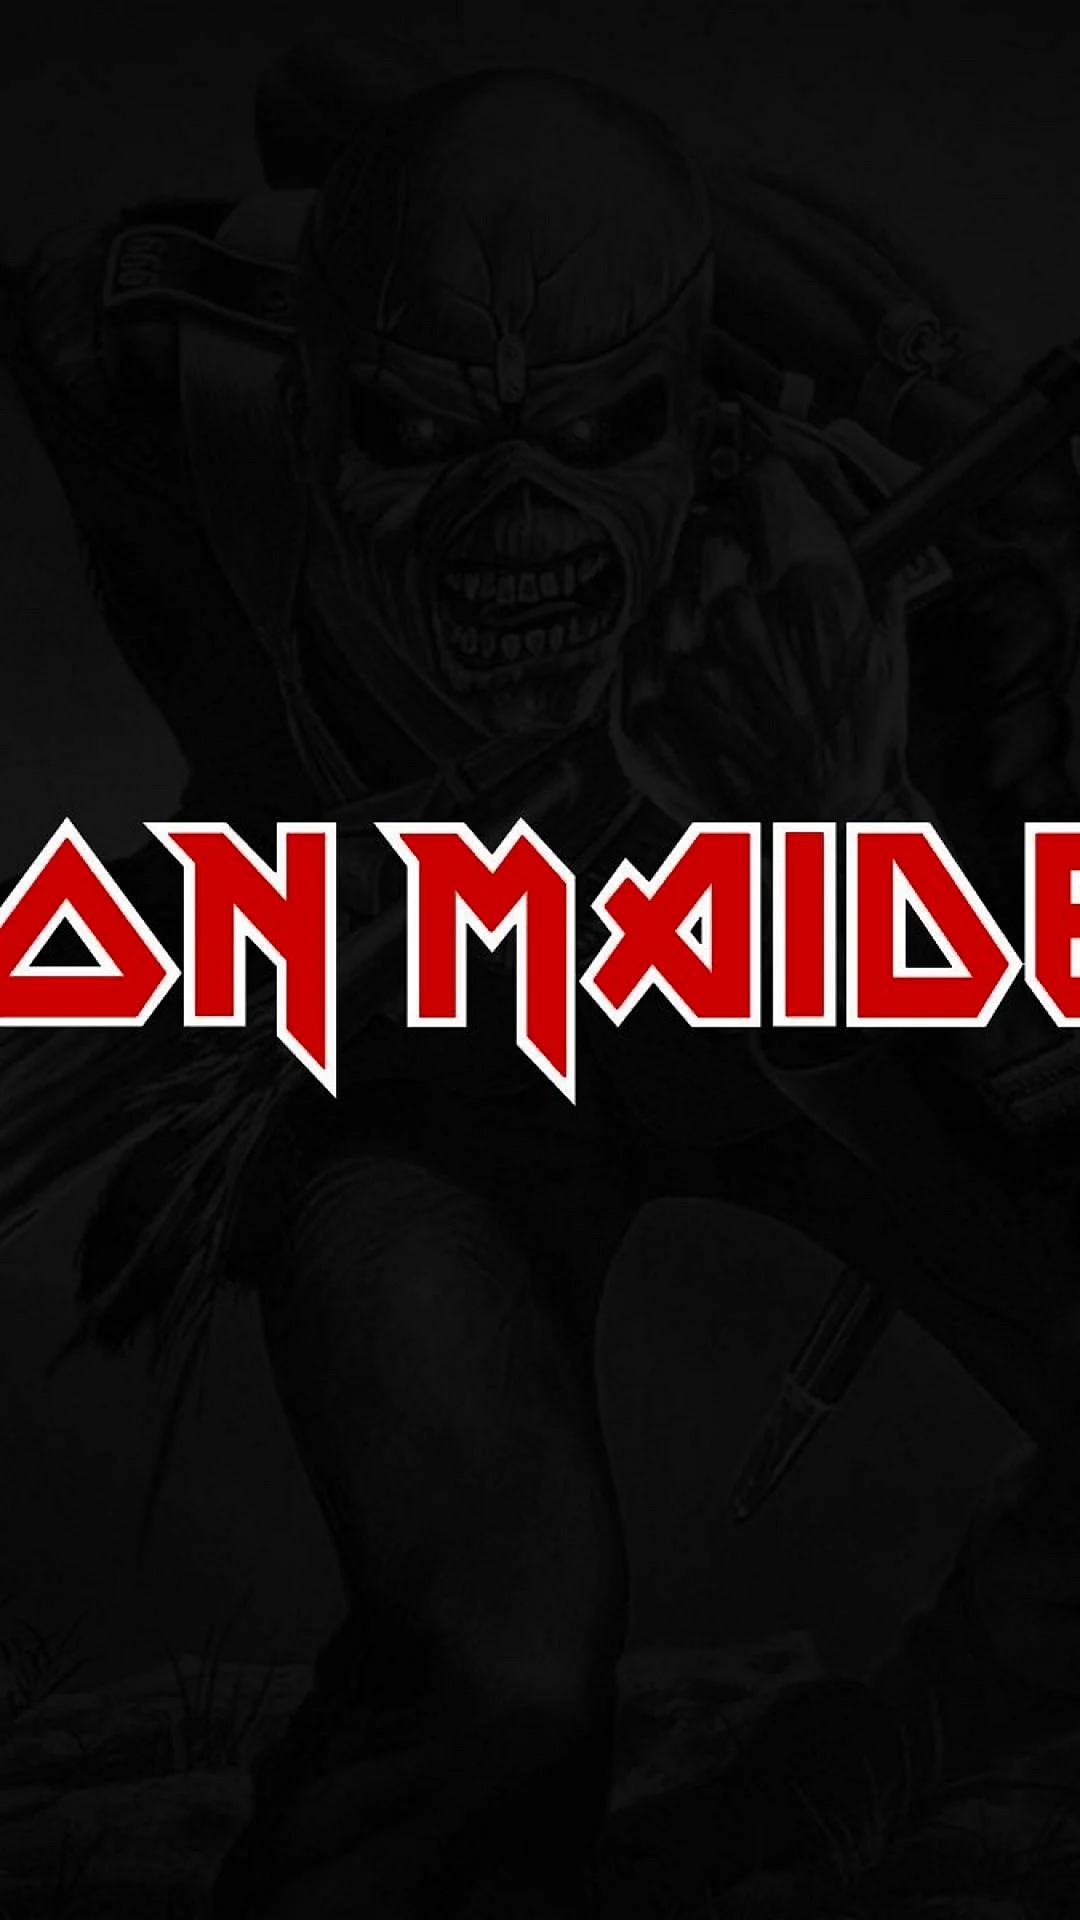 Iron Maiden Logo Wallpaper For iPhone